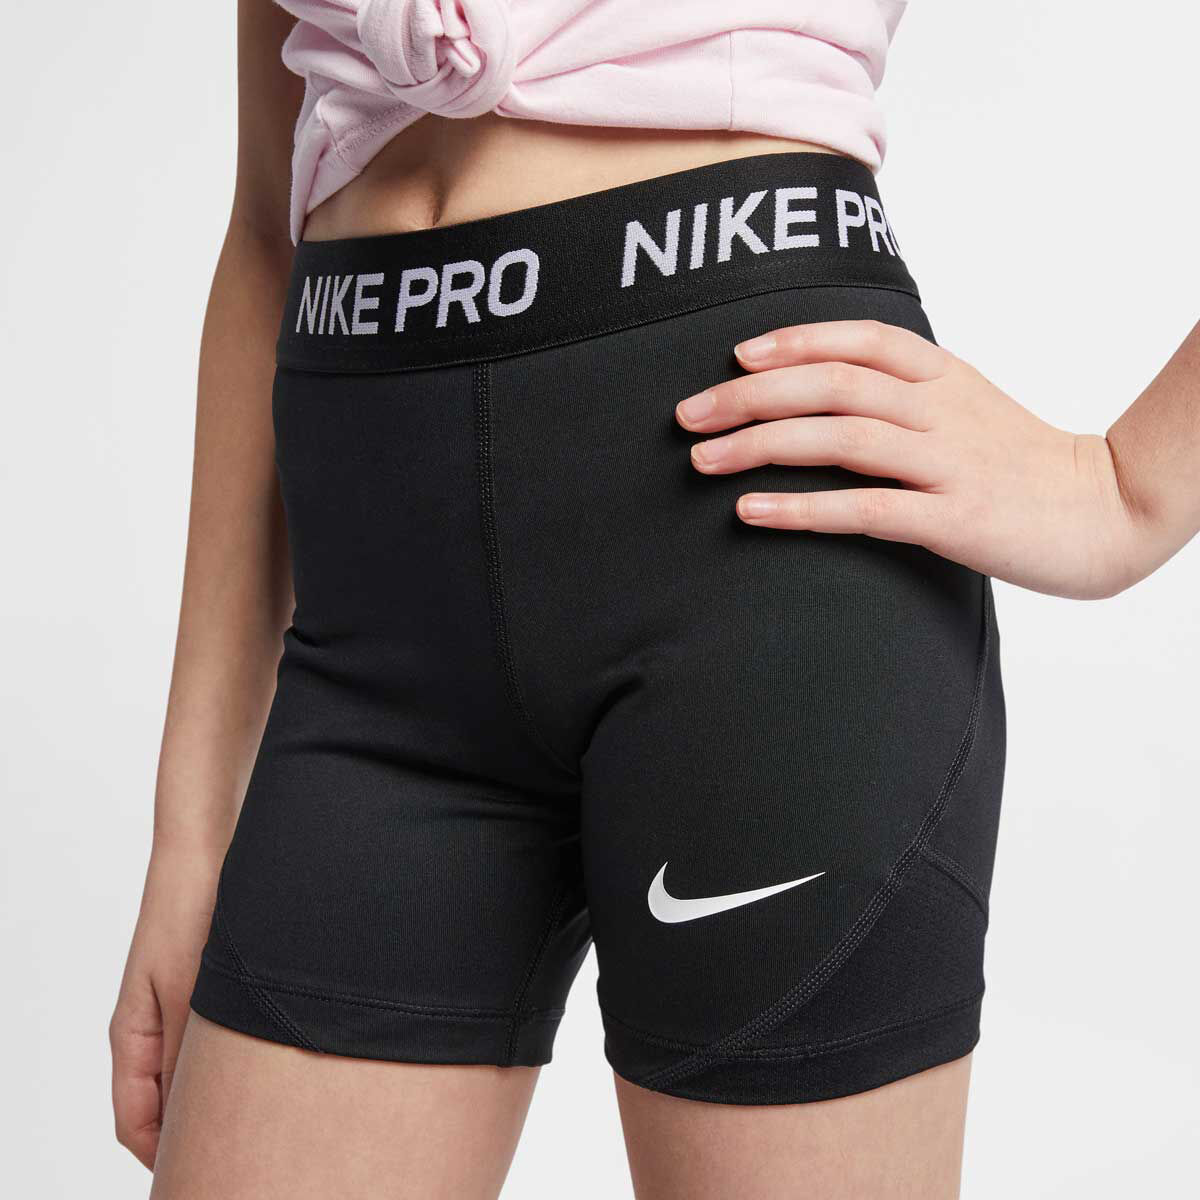 girls wearing nike pro shorts